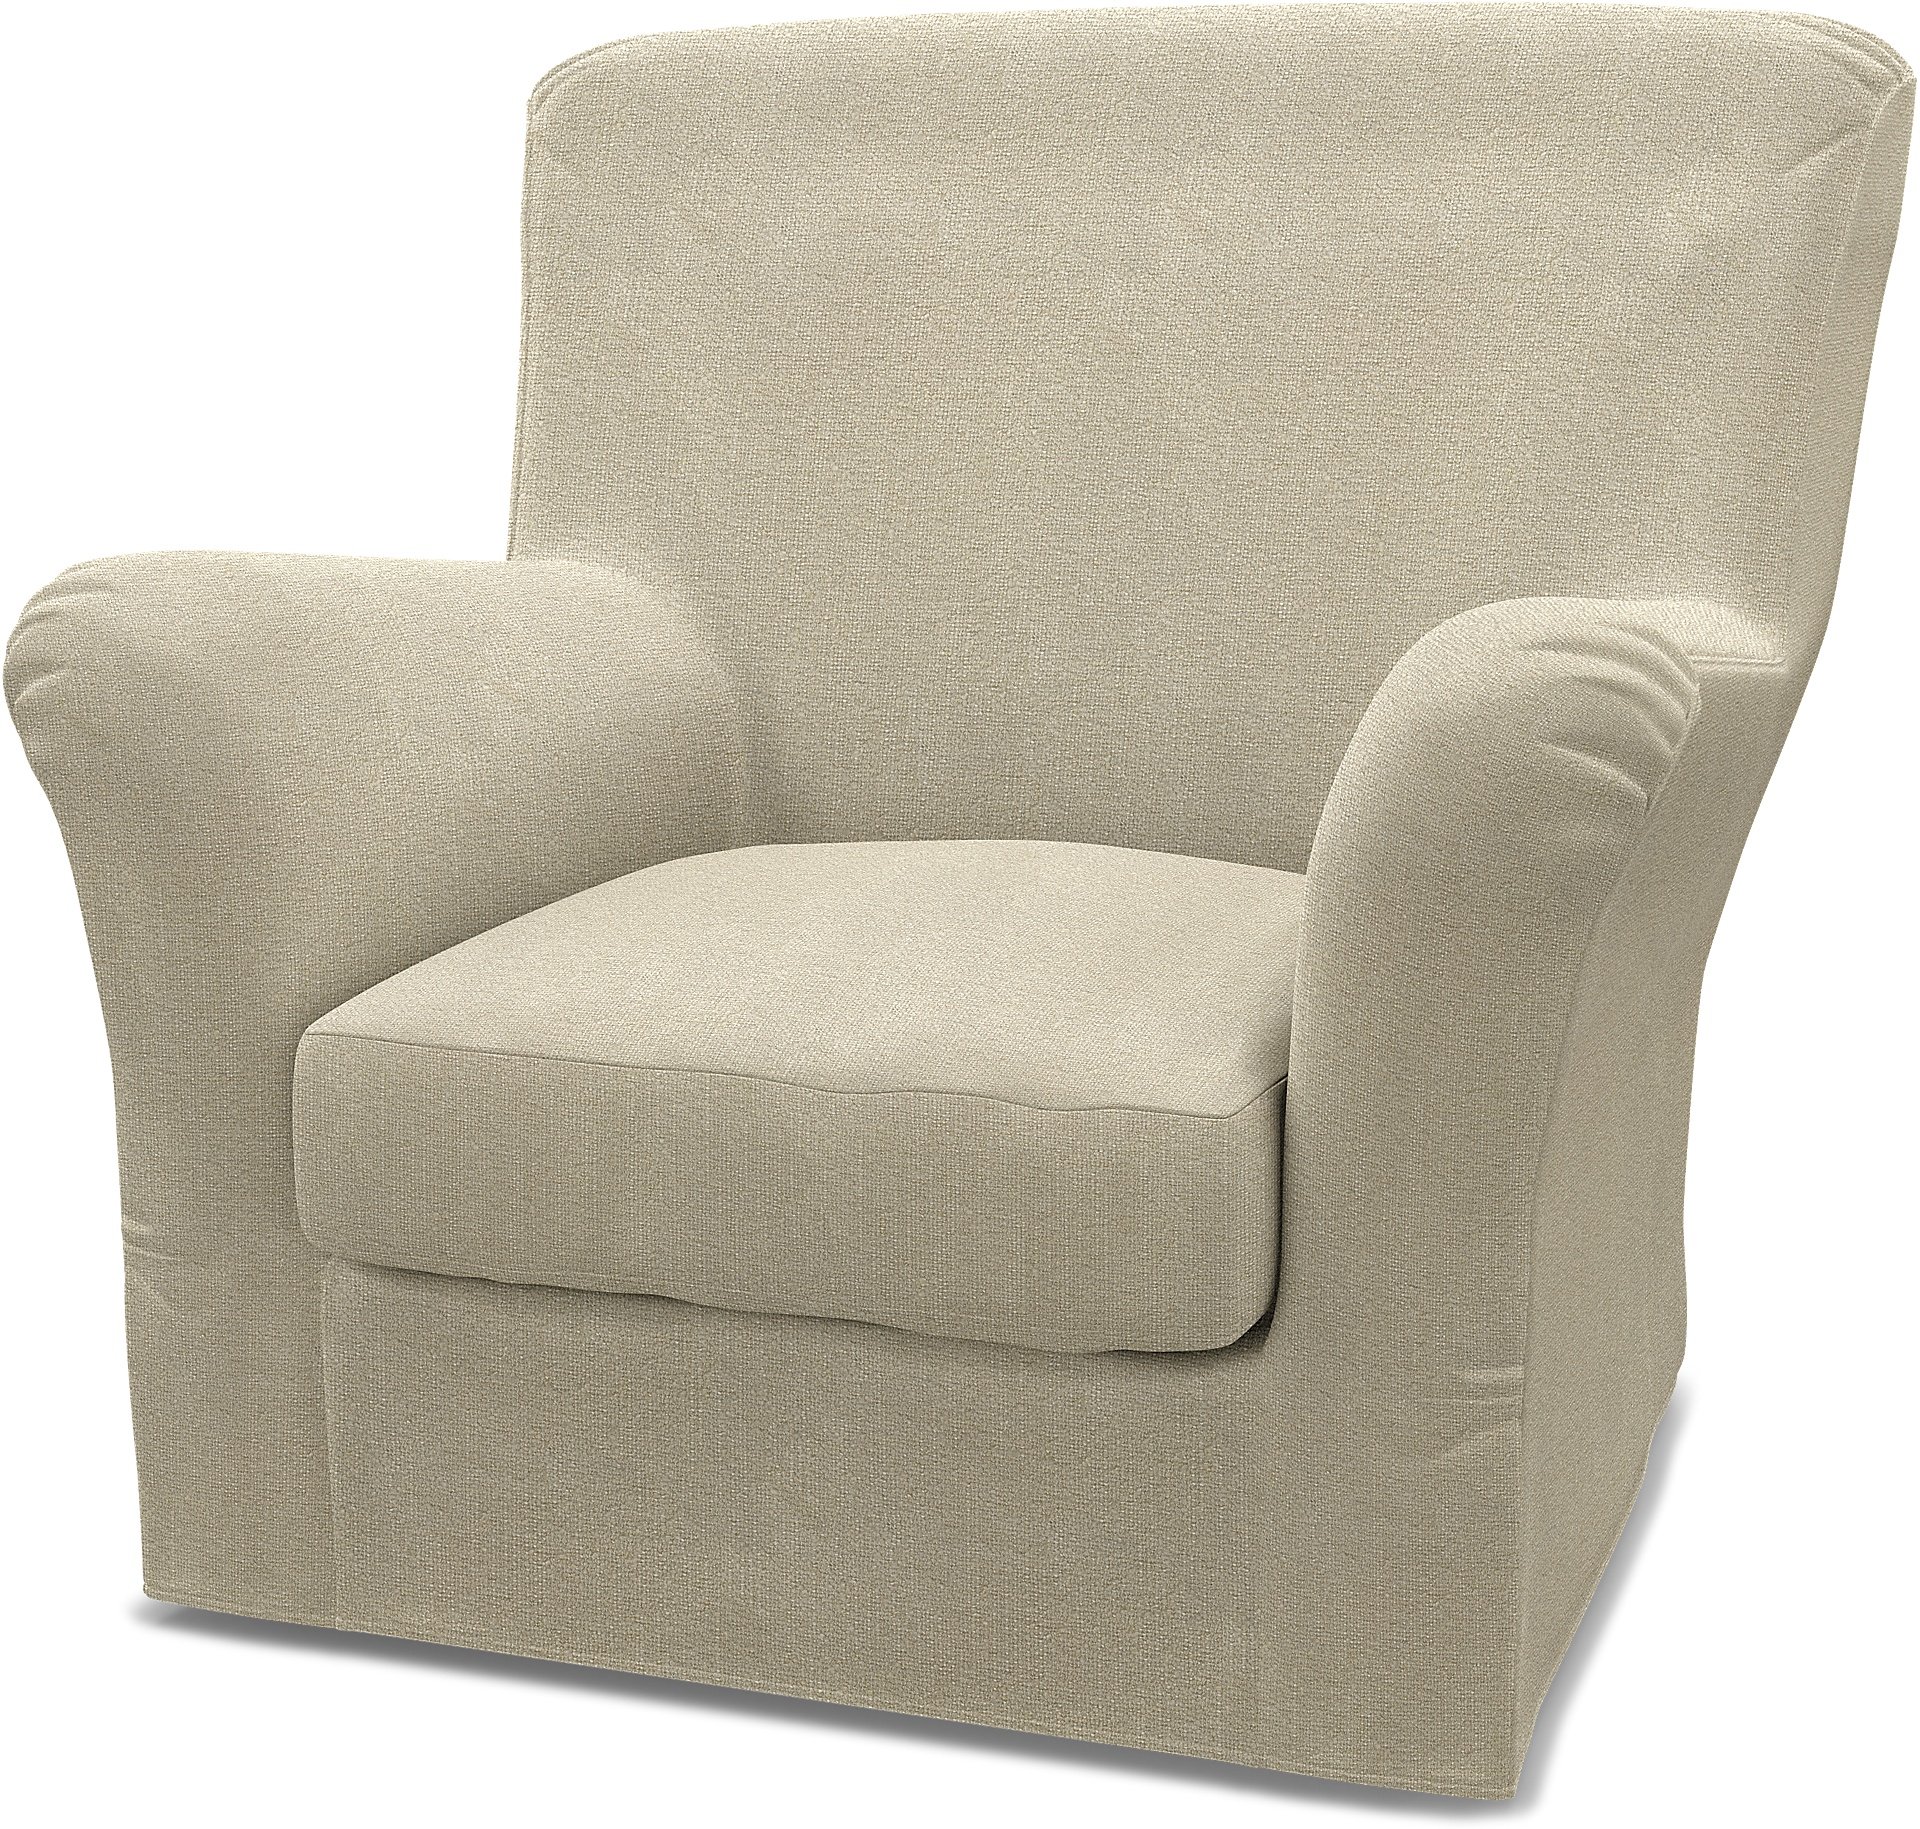 IKEA - Tomelilla High Back Armchair Cover (Standard model), Cream, Boucle & Texture - Bemz